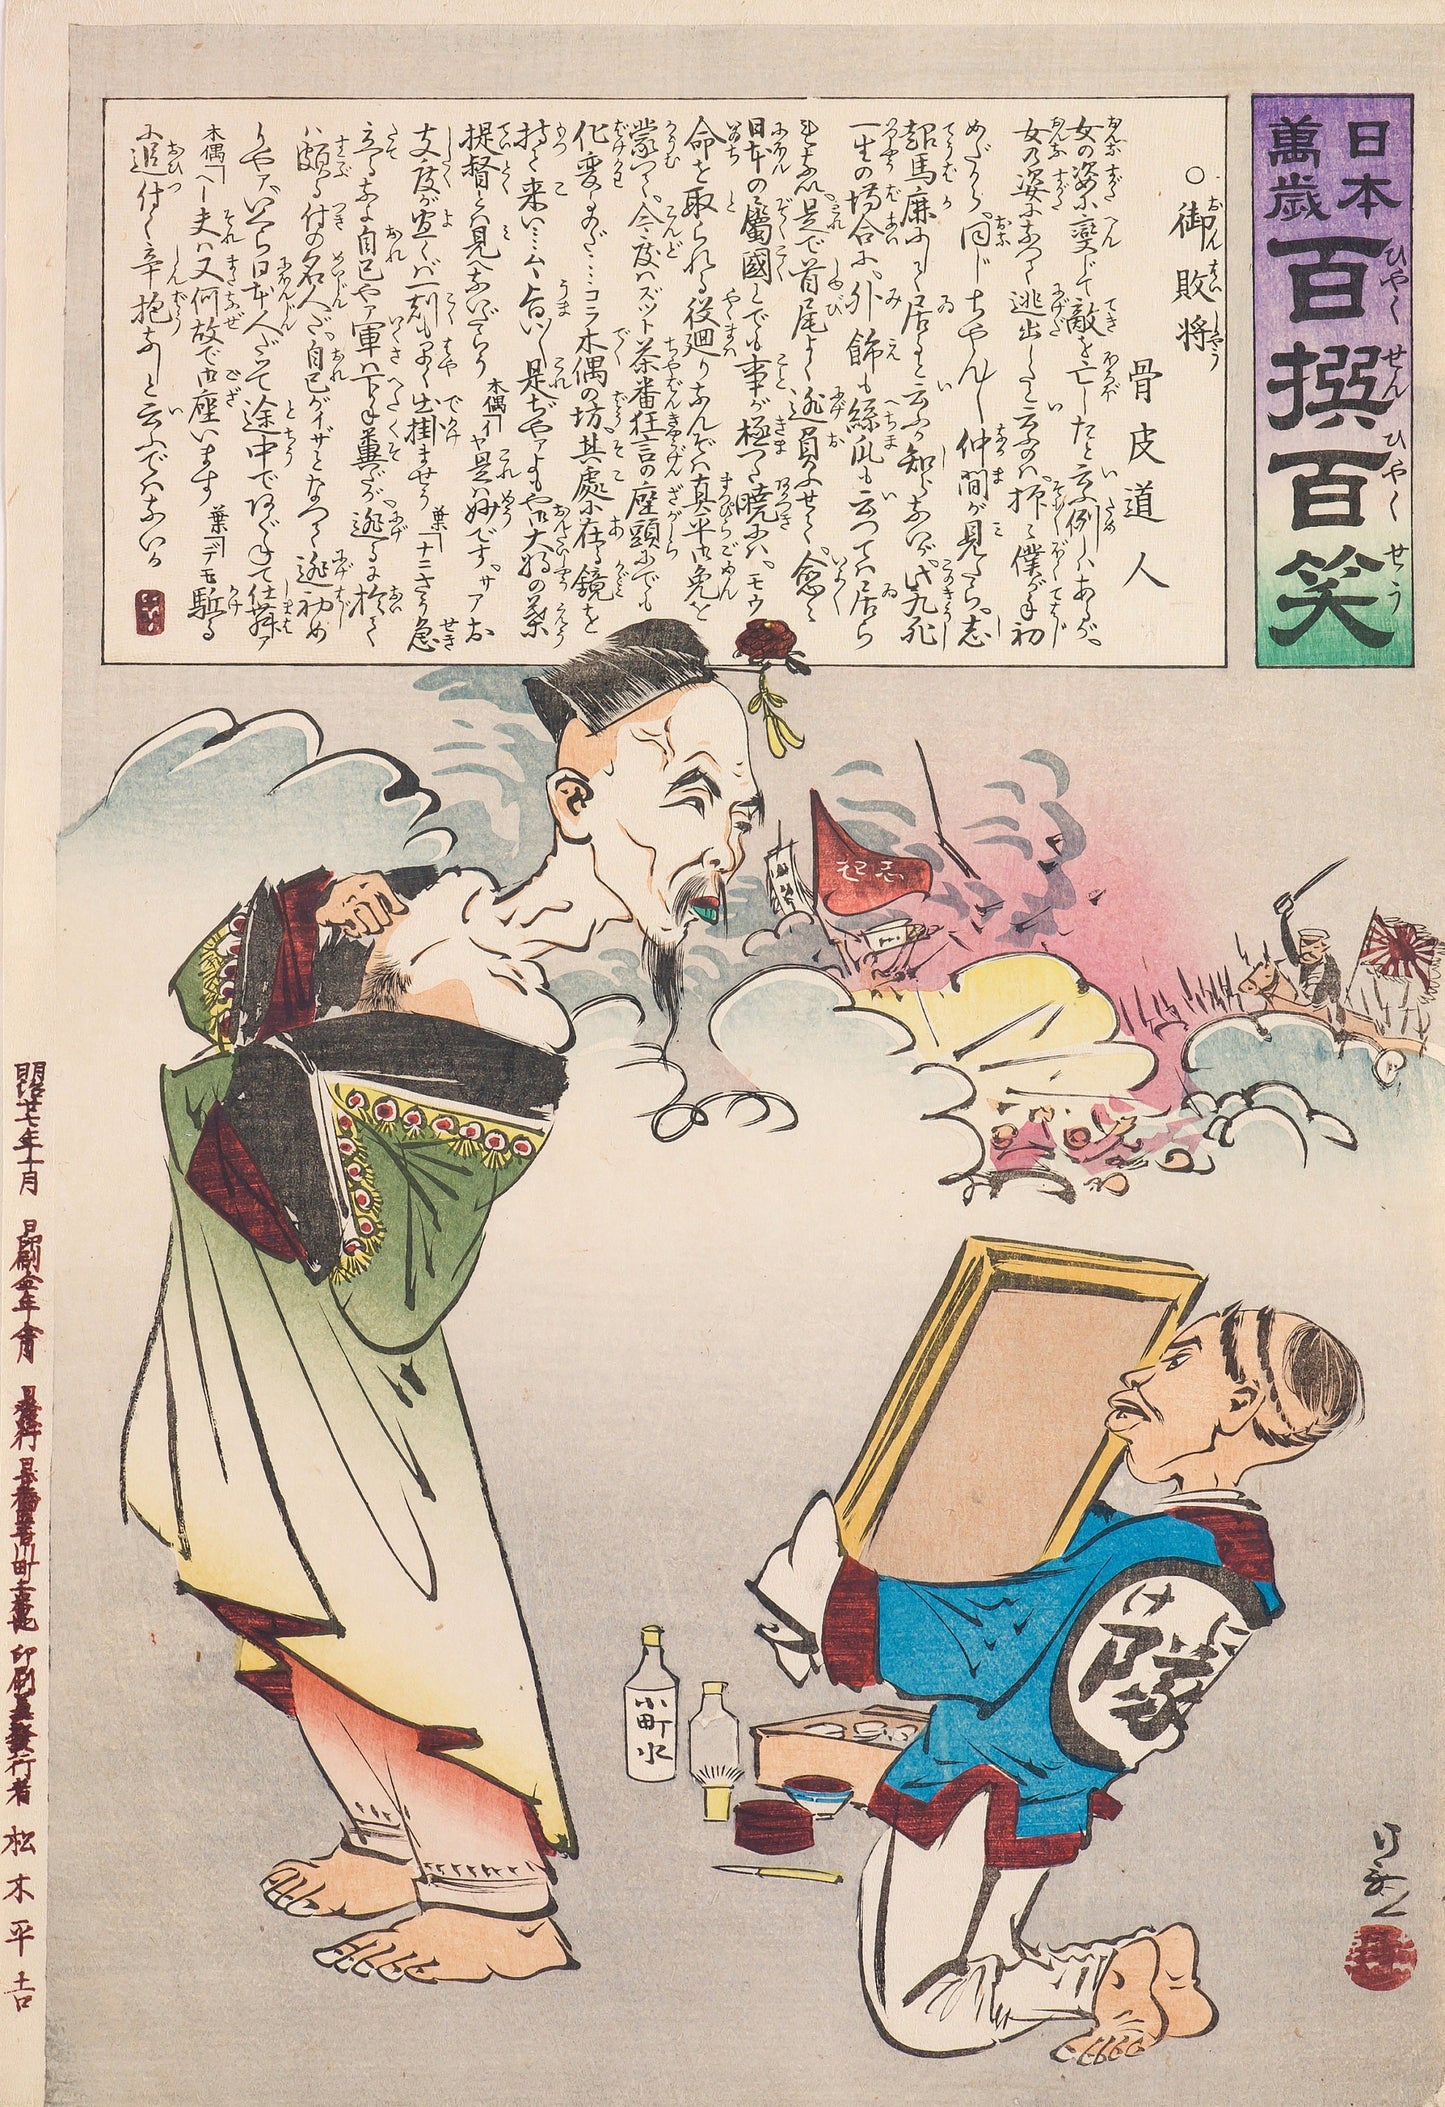 Kobayashi Kiyochika Ukiyo-e Cartoon Woodblock Prints [10 Images]